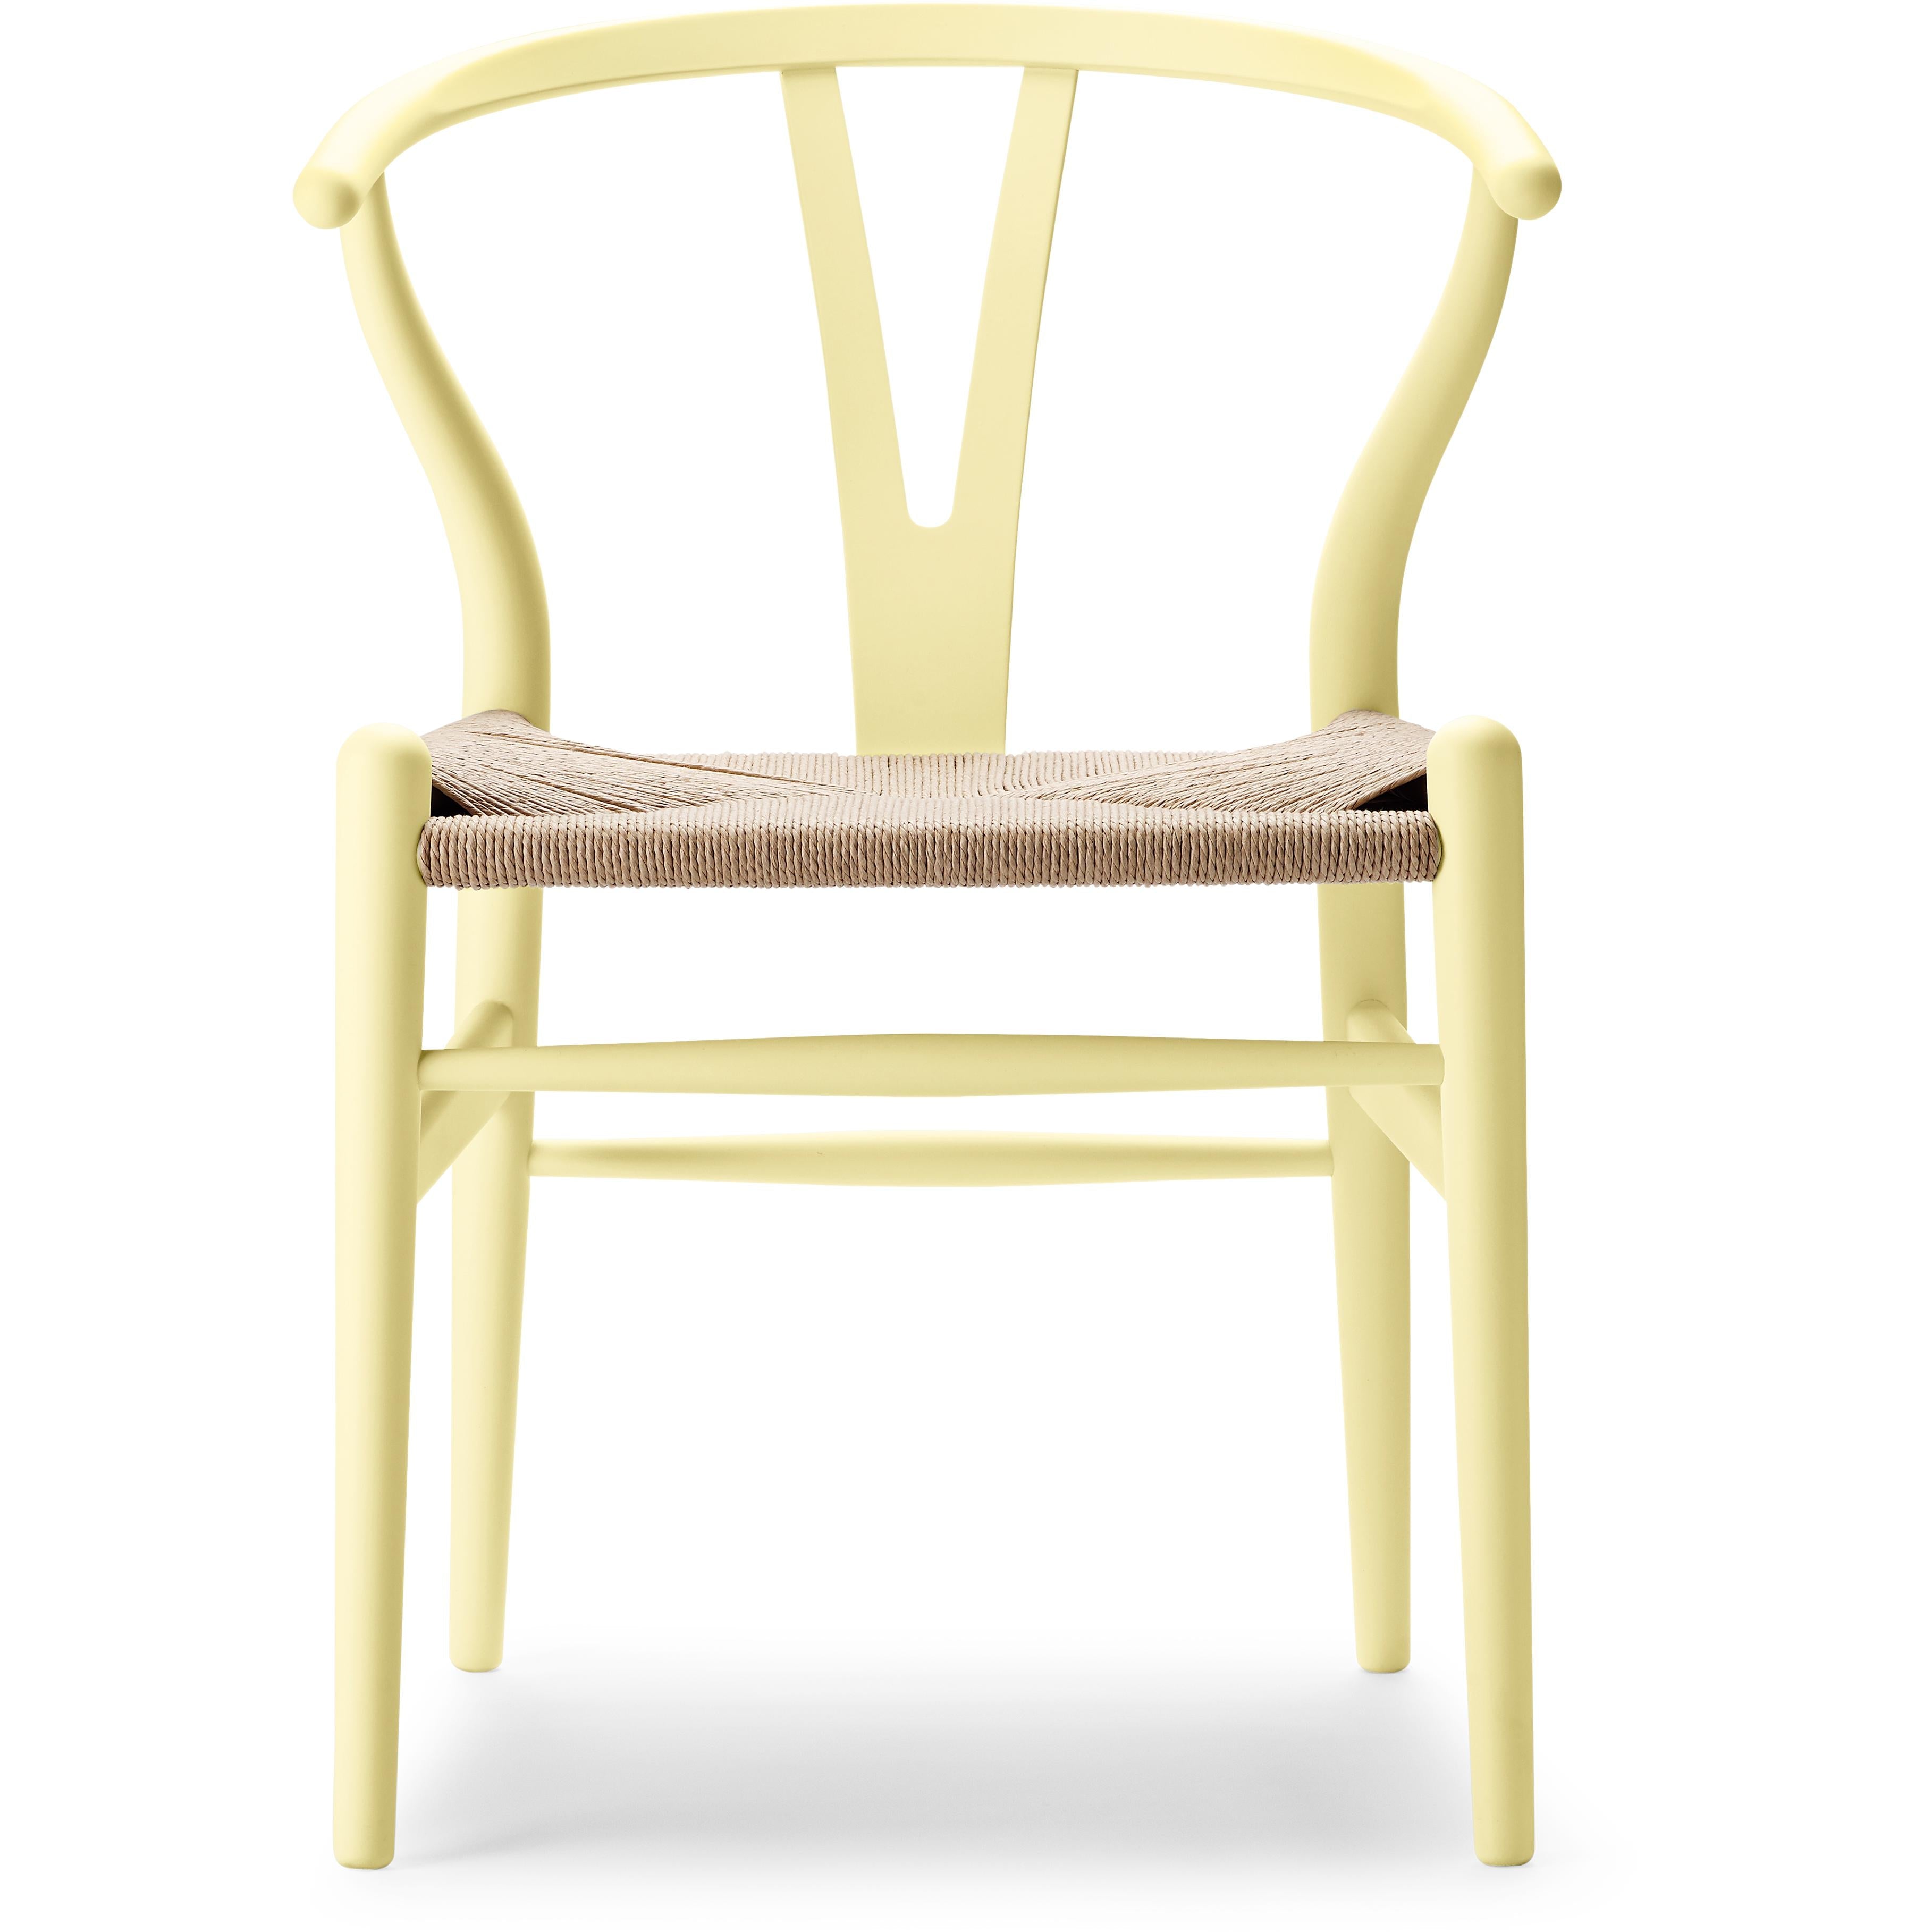 Carl Hansen CH24 Soft Y -Chair Beech, Hollyhock - Special Edition